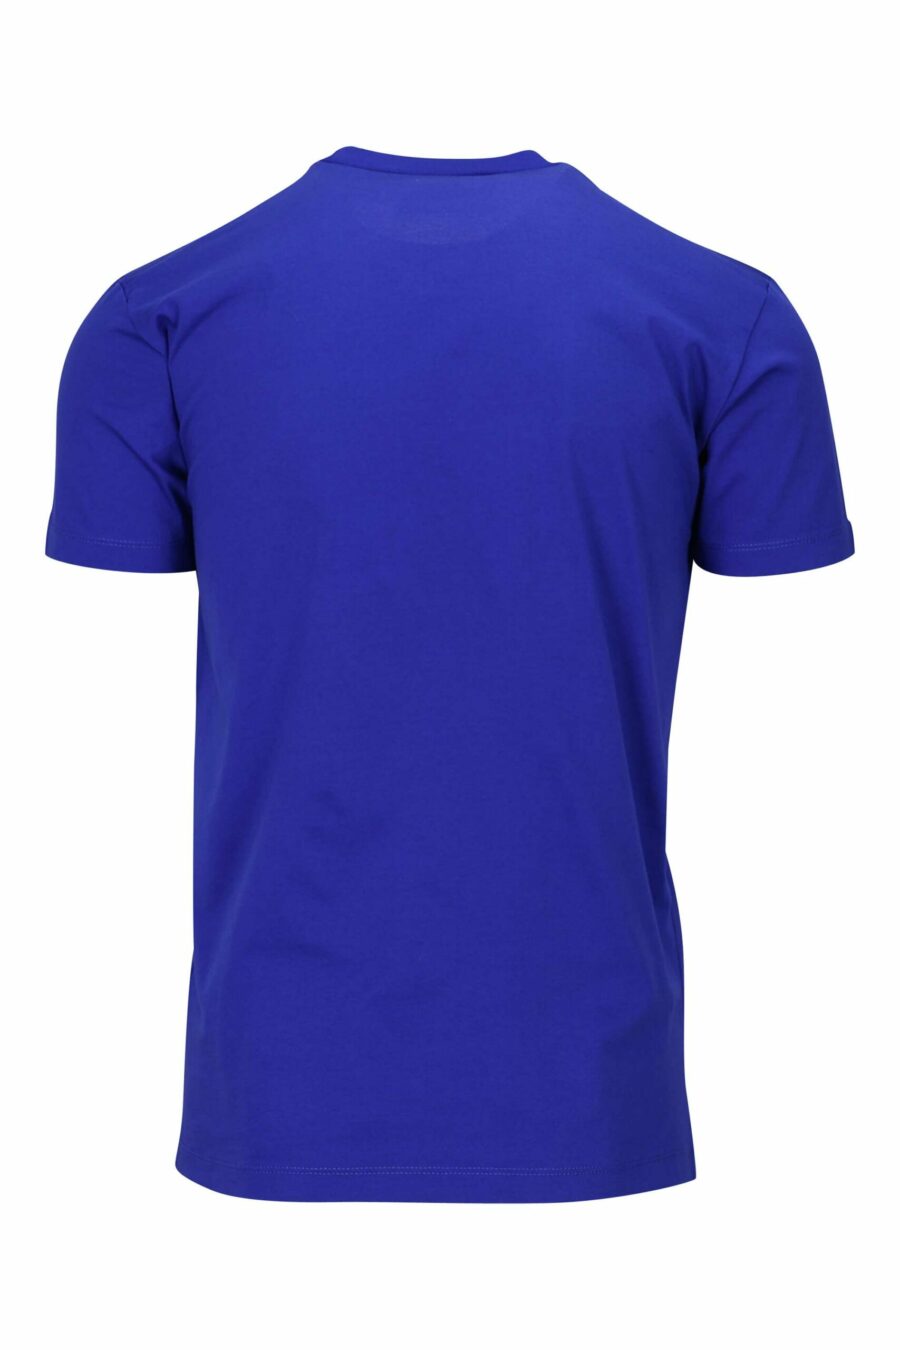 Electric blue T-shirt with white "icon" maxilogo - 8054148035525 1 scaled